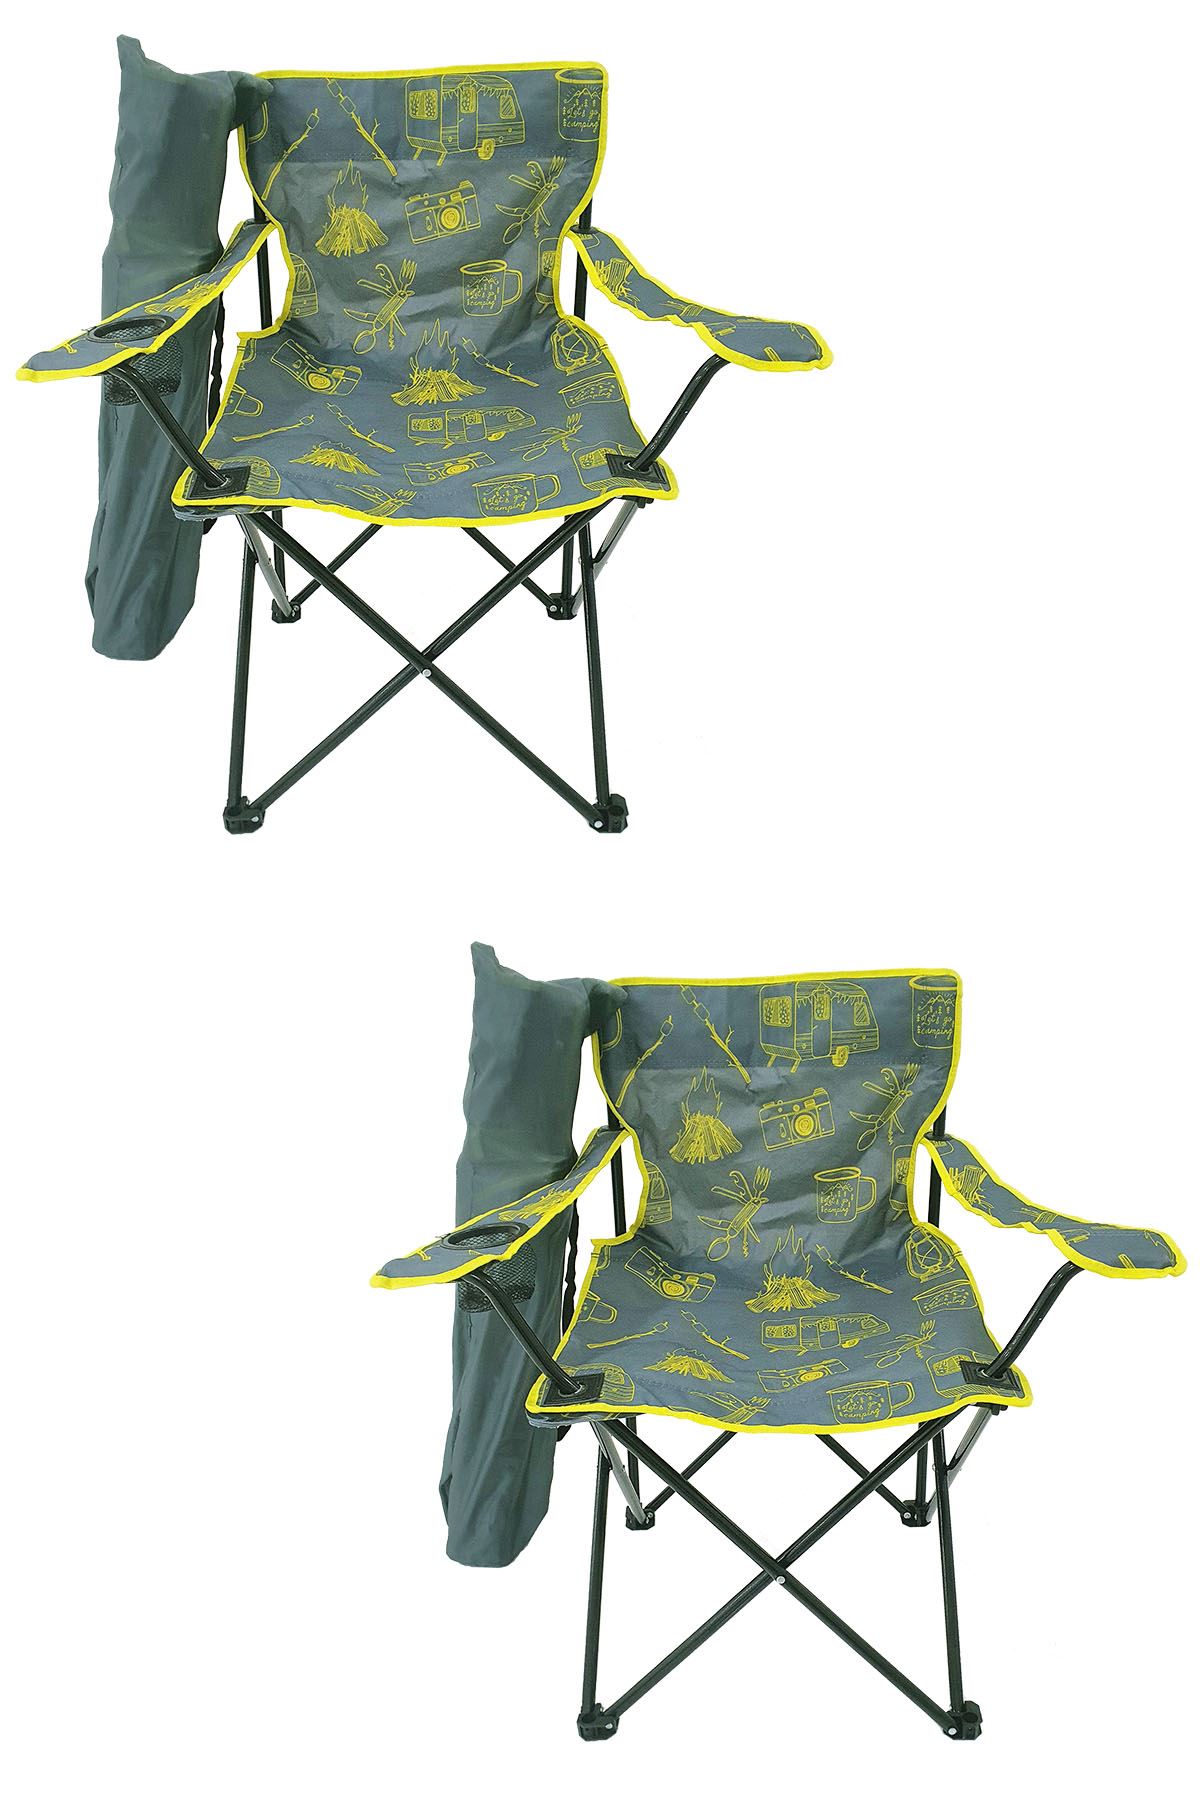 Bofigo 2 Pieces Camping Chair Folding Chair Garden Chair Picnic Beach Chair Patterned Gray